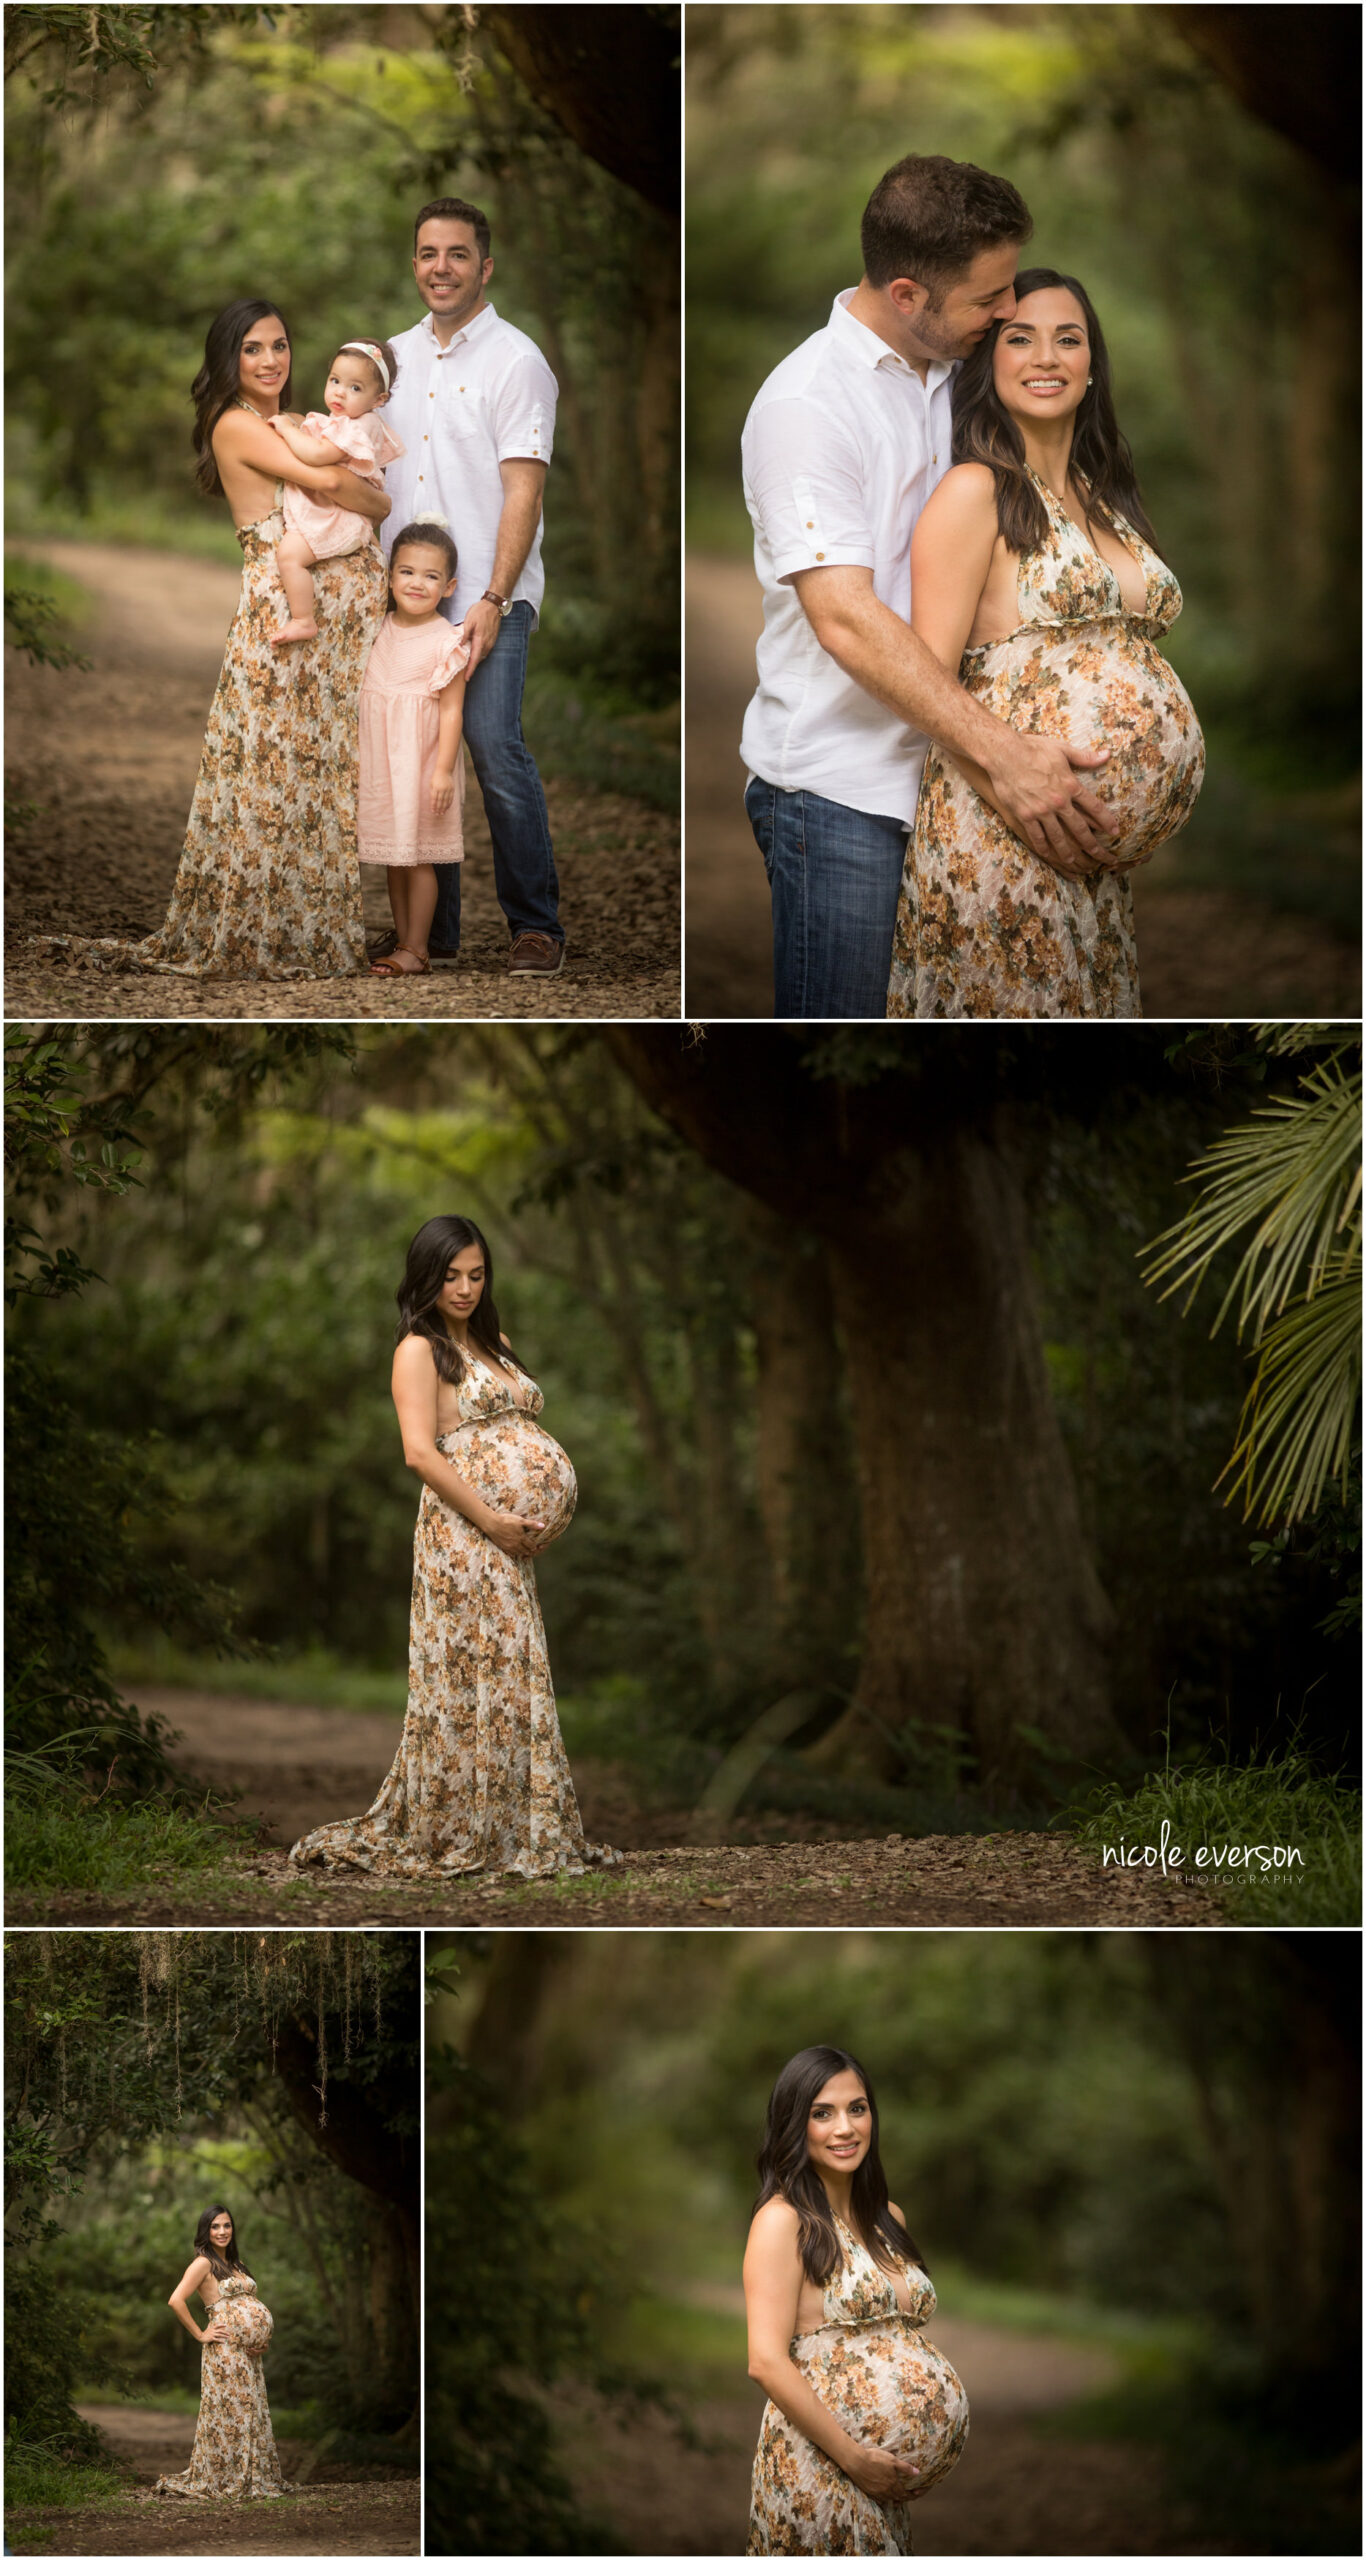 Best maternity photo shoot ideas | Pregnancy photos couples, Pregnancy  photos, Maternity pictures